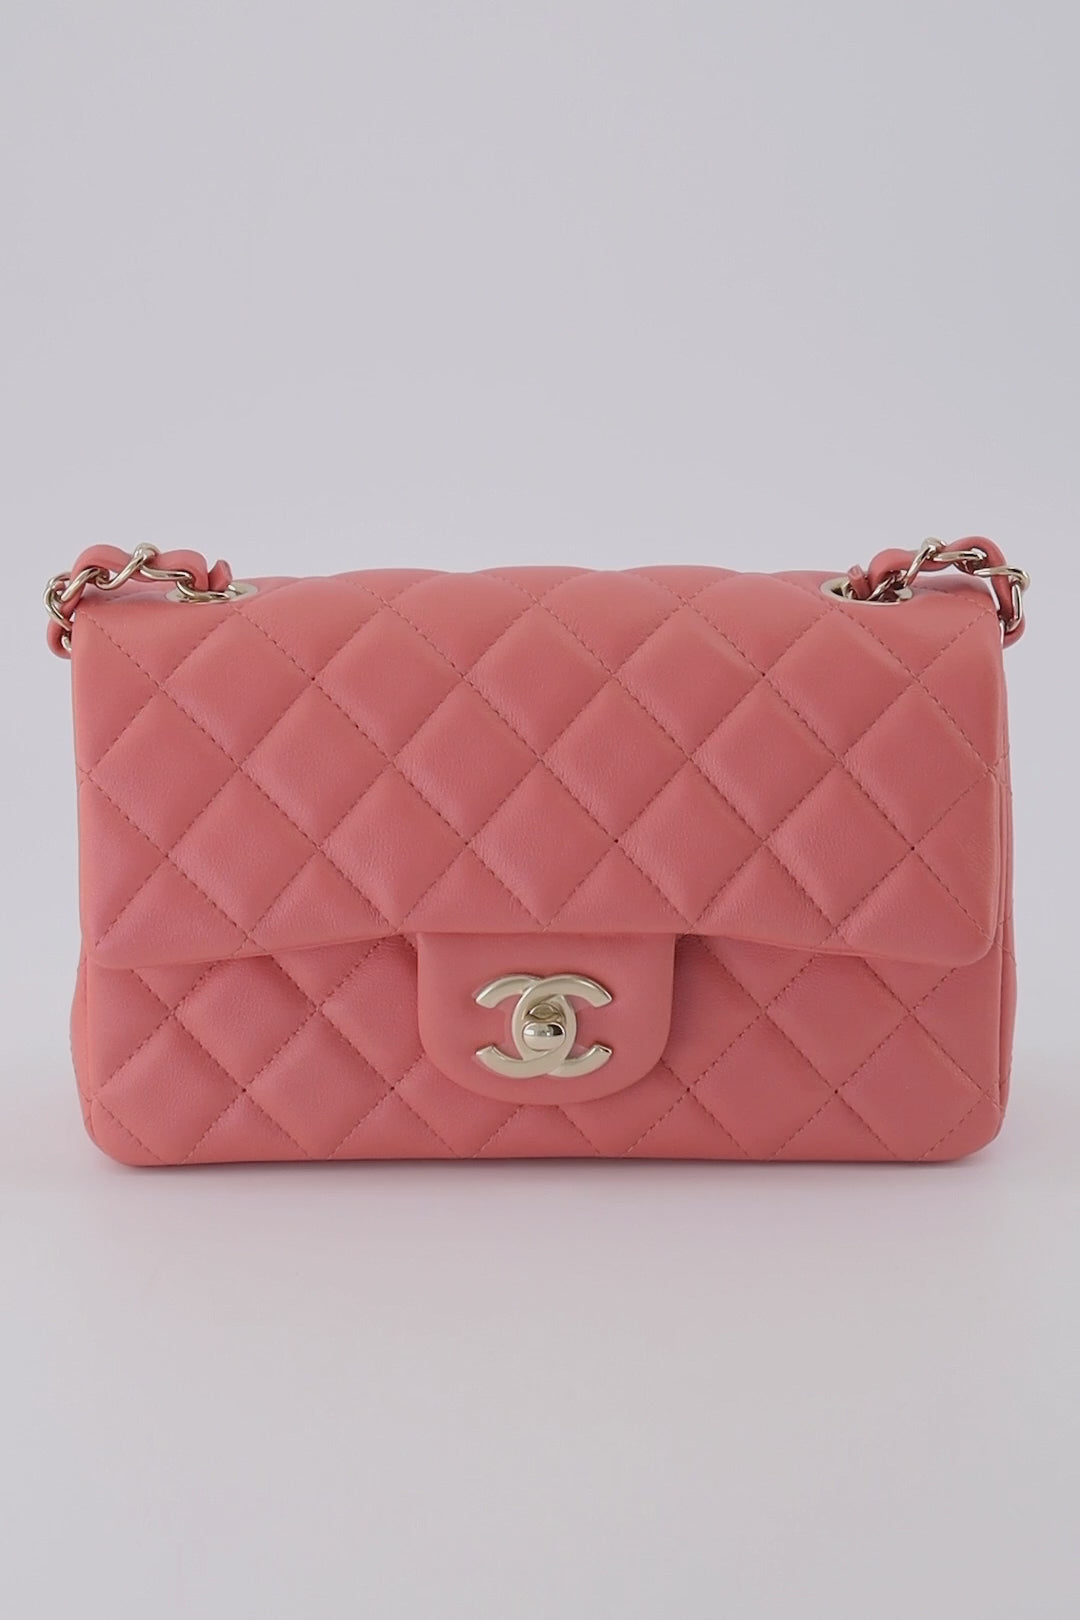 Chanel Mini Rectangular Flap Bag Pink Colour